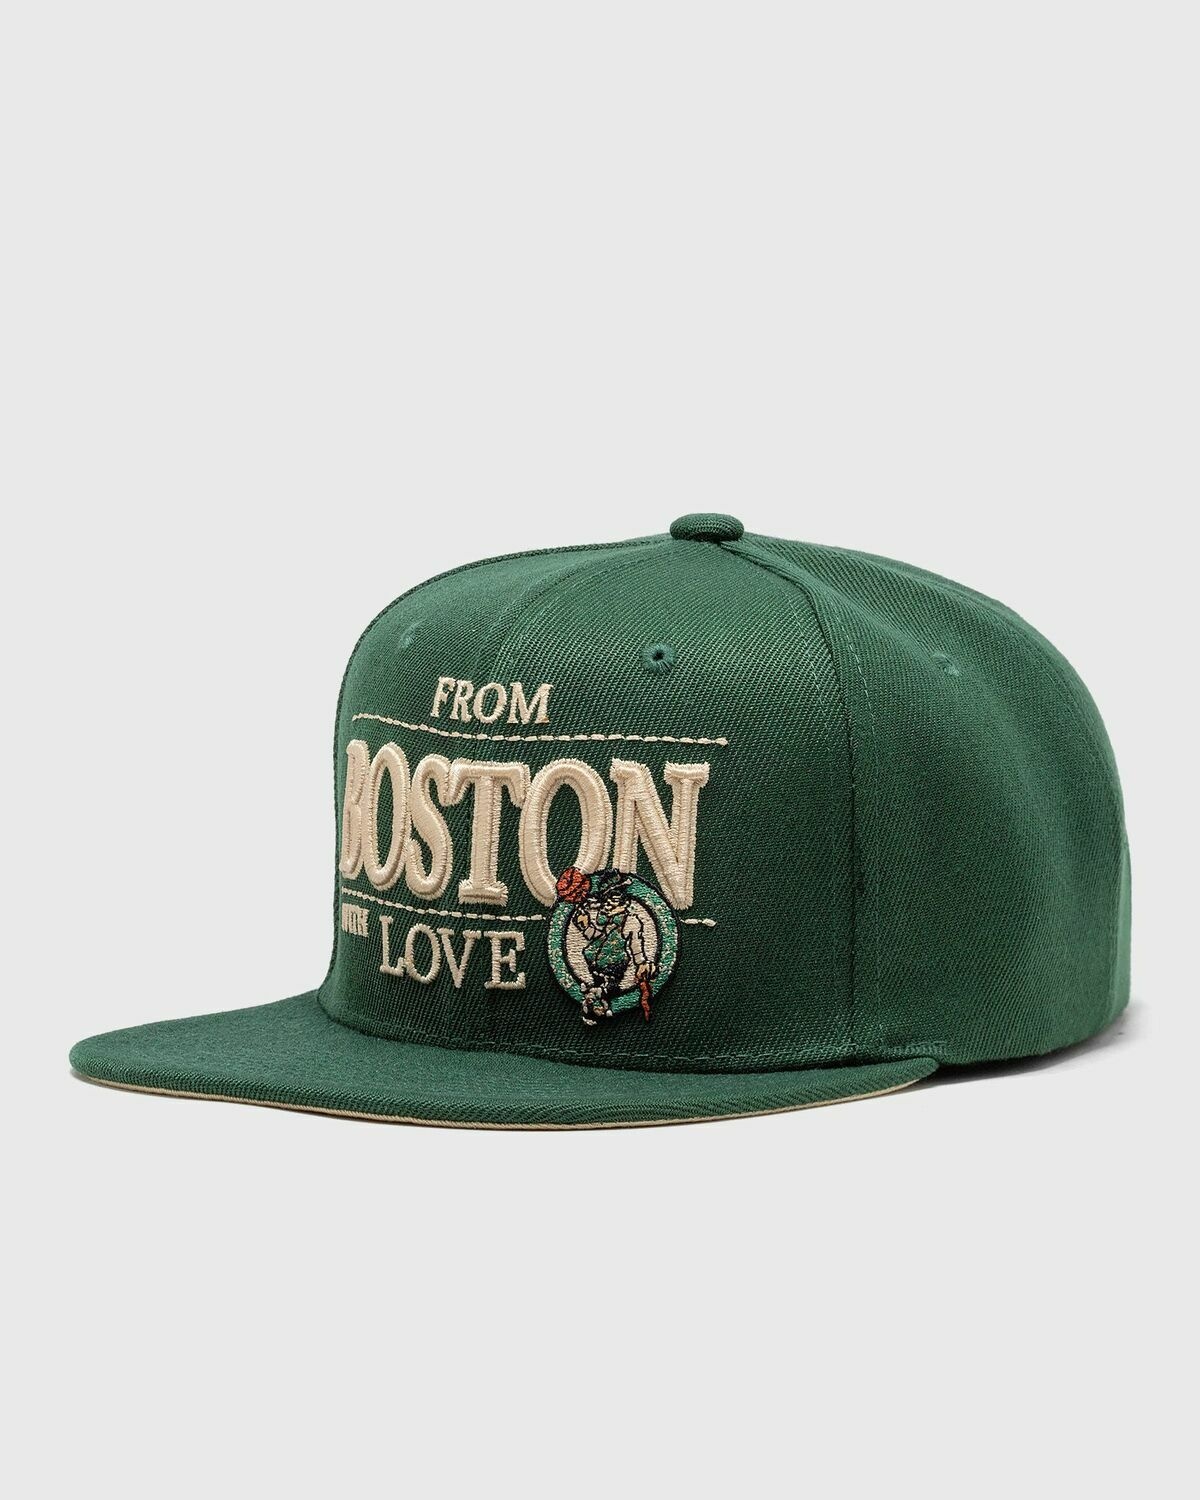 Mitchell & Ness Nba With Love Snapback Celtics Green - Mens - Caps